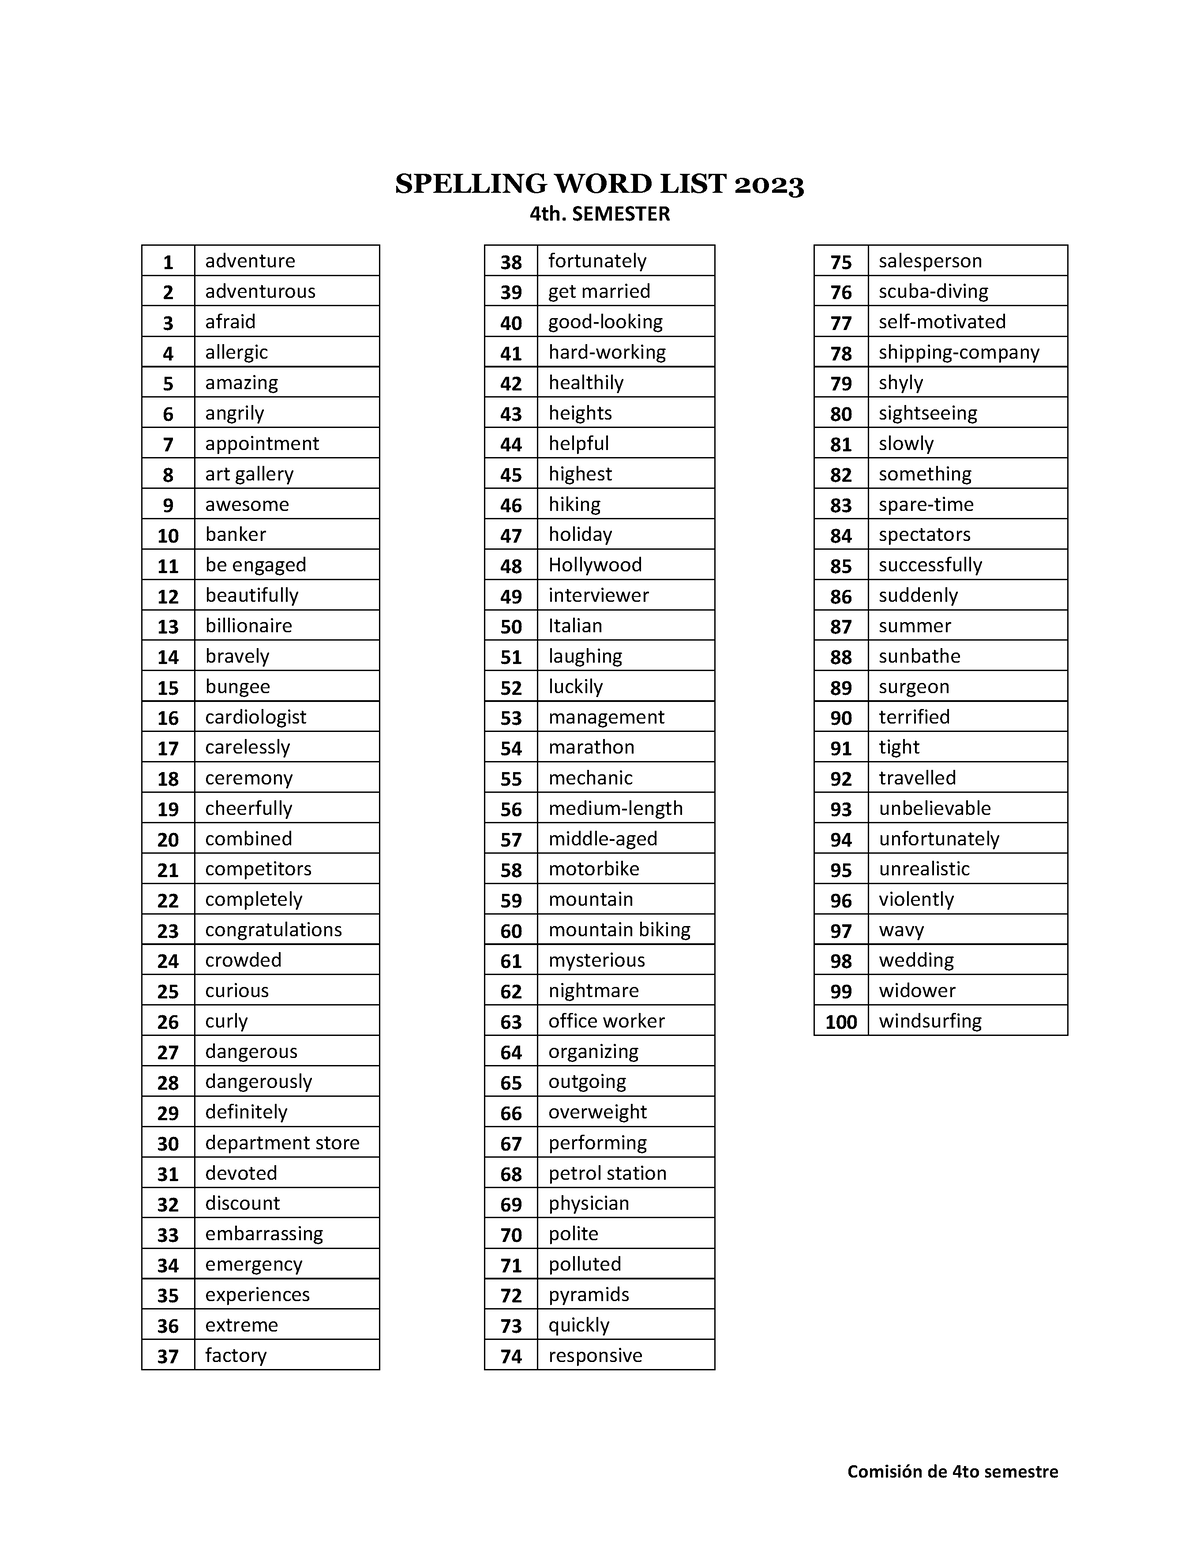 Spelling Bee list 4th semestre 2023 Comisión de 4to semestre SPELLING